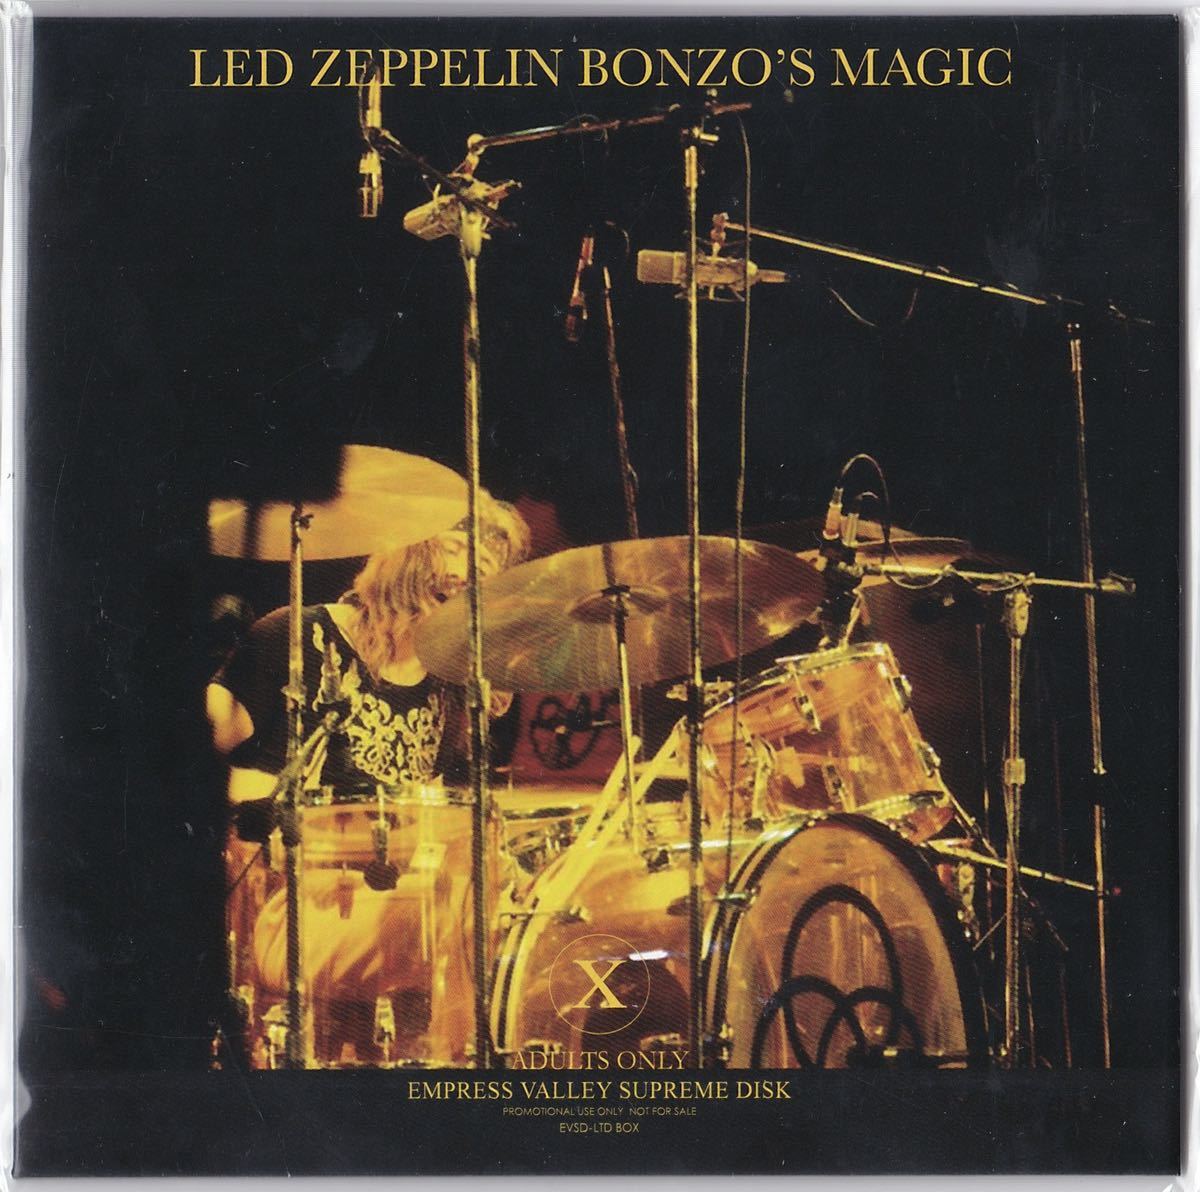 Императрическая долина лидировала Zeppelin / Bonzo's Magic Red Zeppelin Evsd